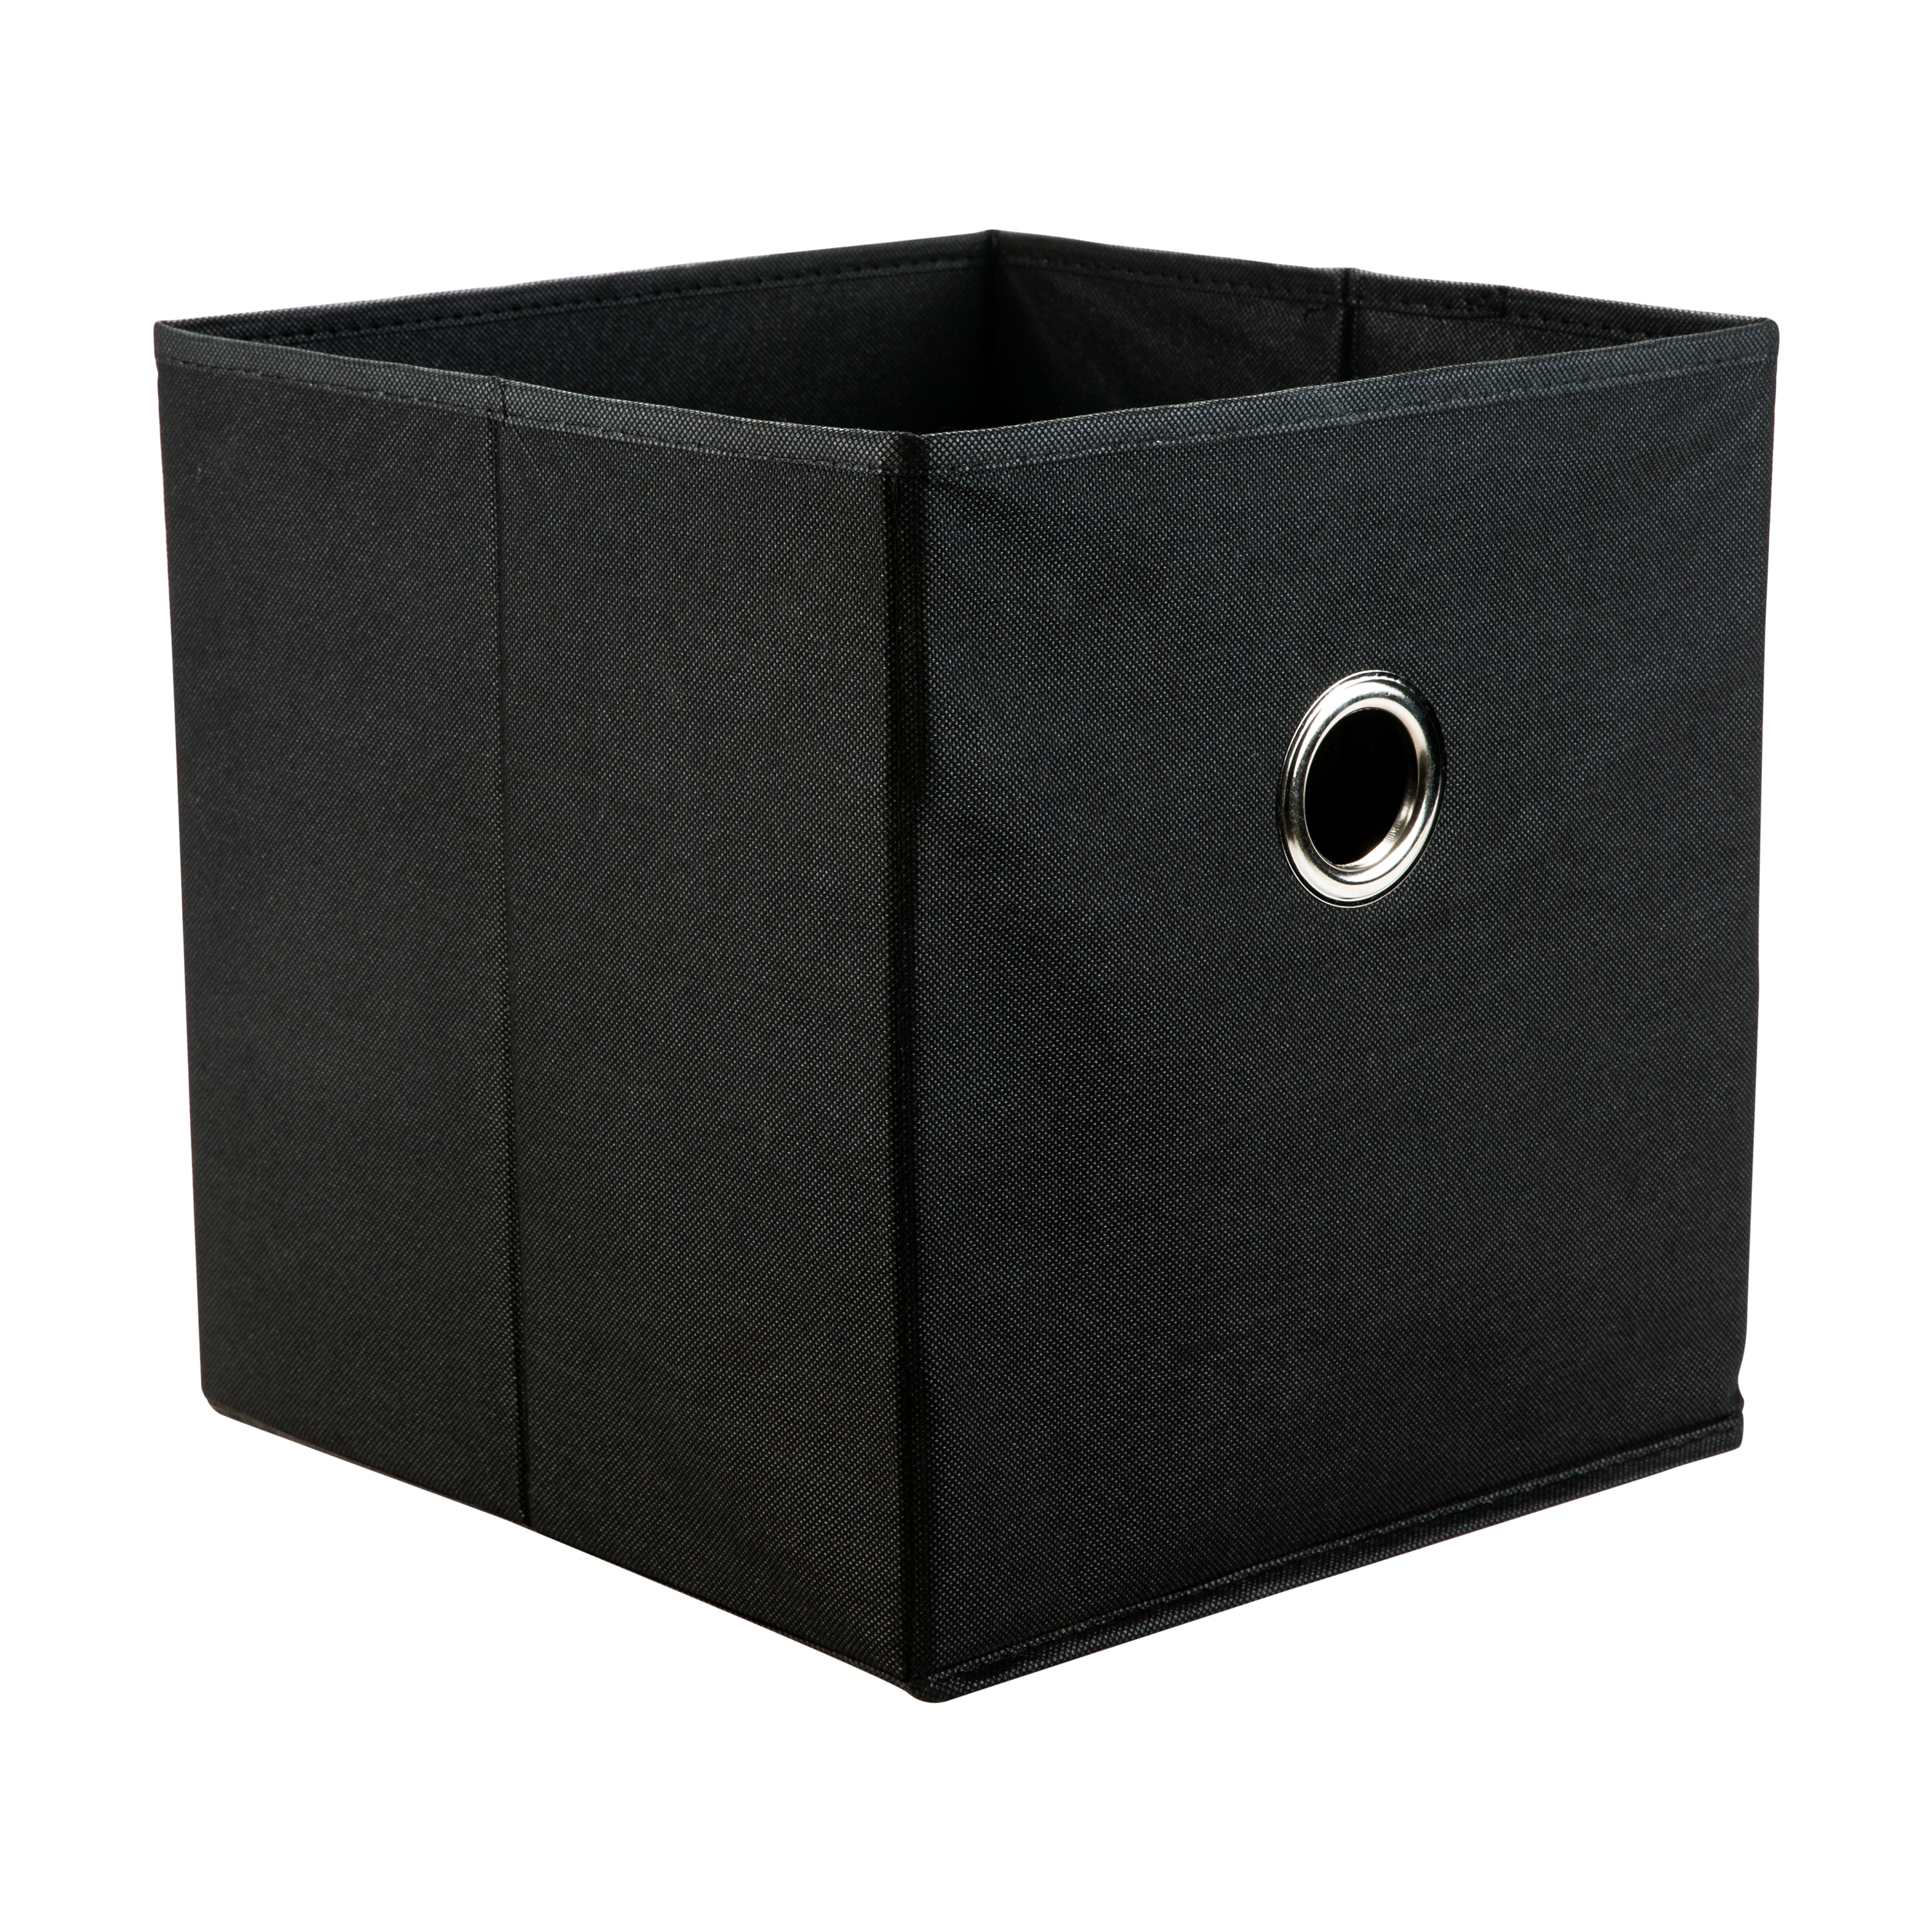 DABEACT Fabric Storage Cube Bins with Lids Closet Organizers collapsible  storage bins basket with Handles for Home,Storage Boxes for Organizing,3